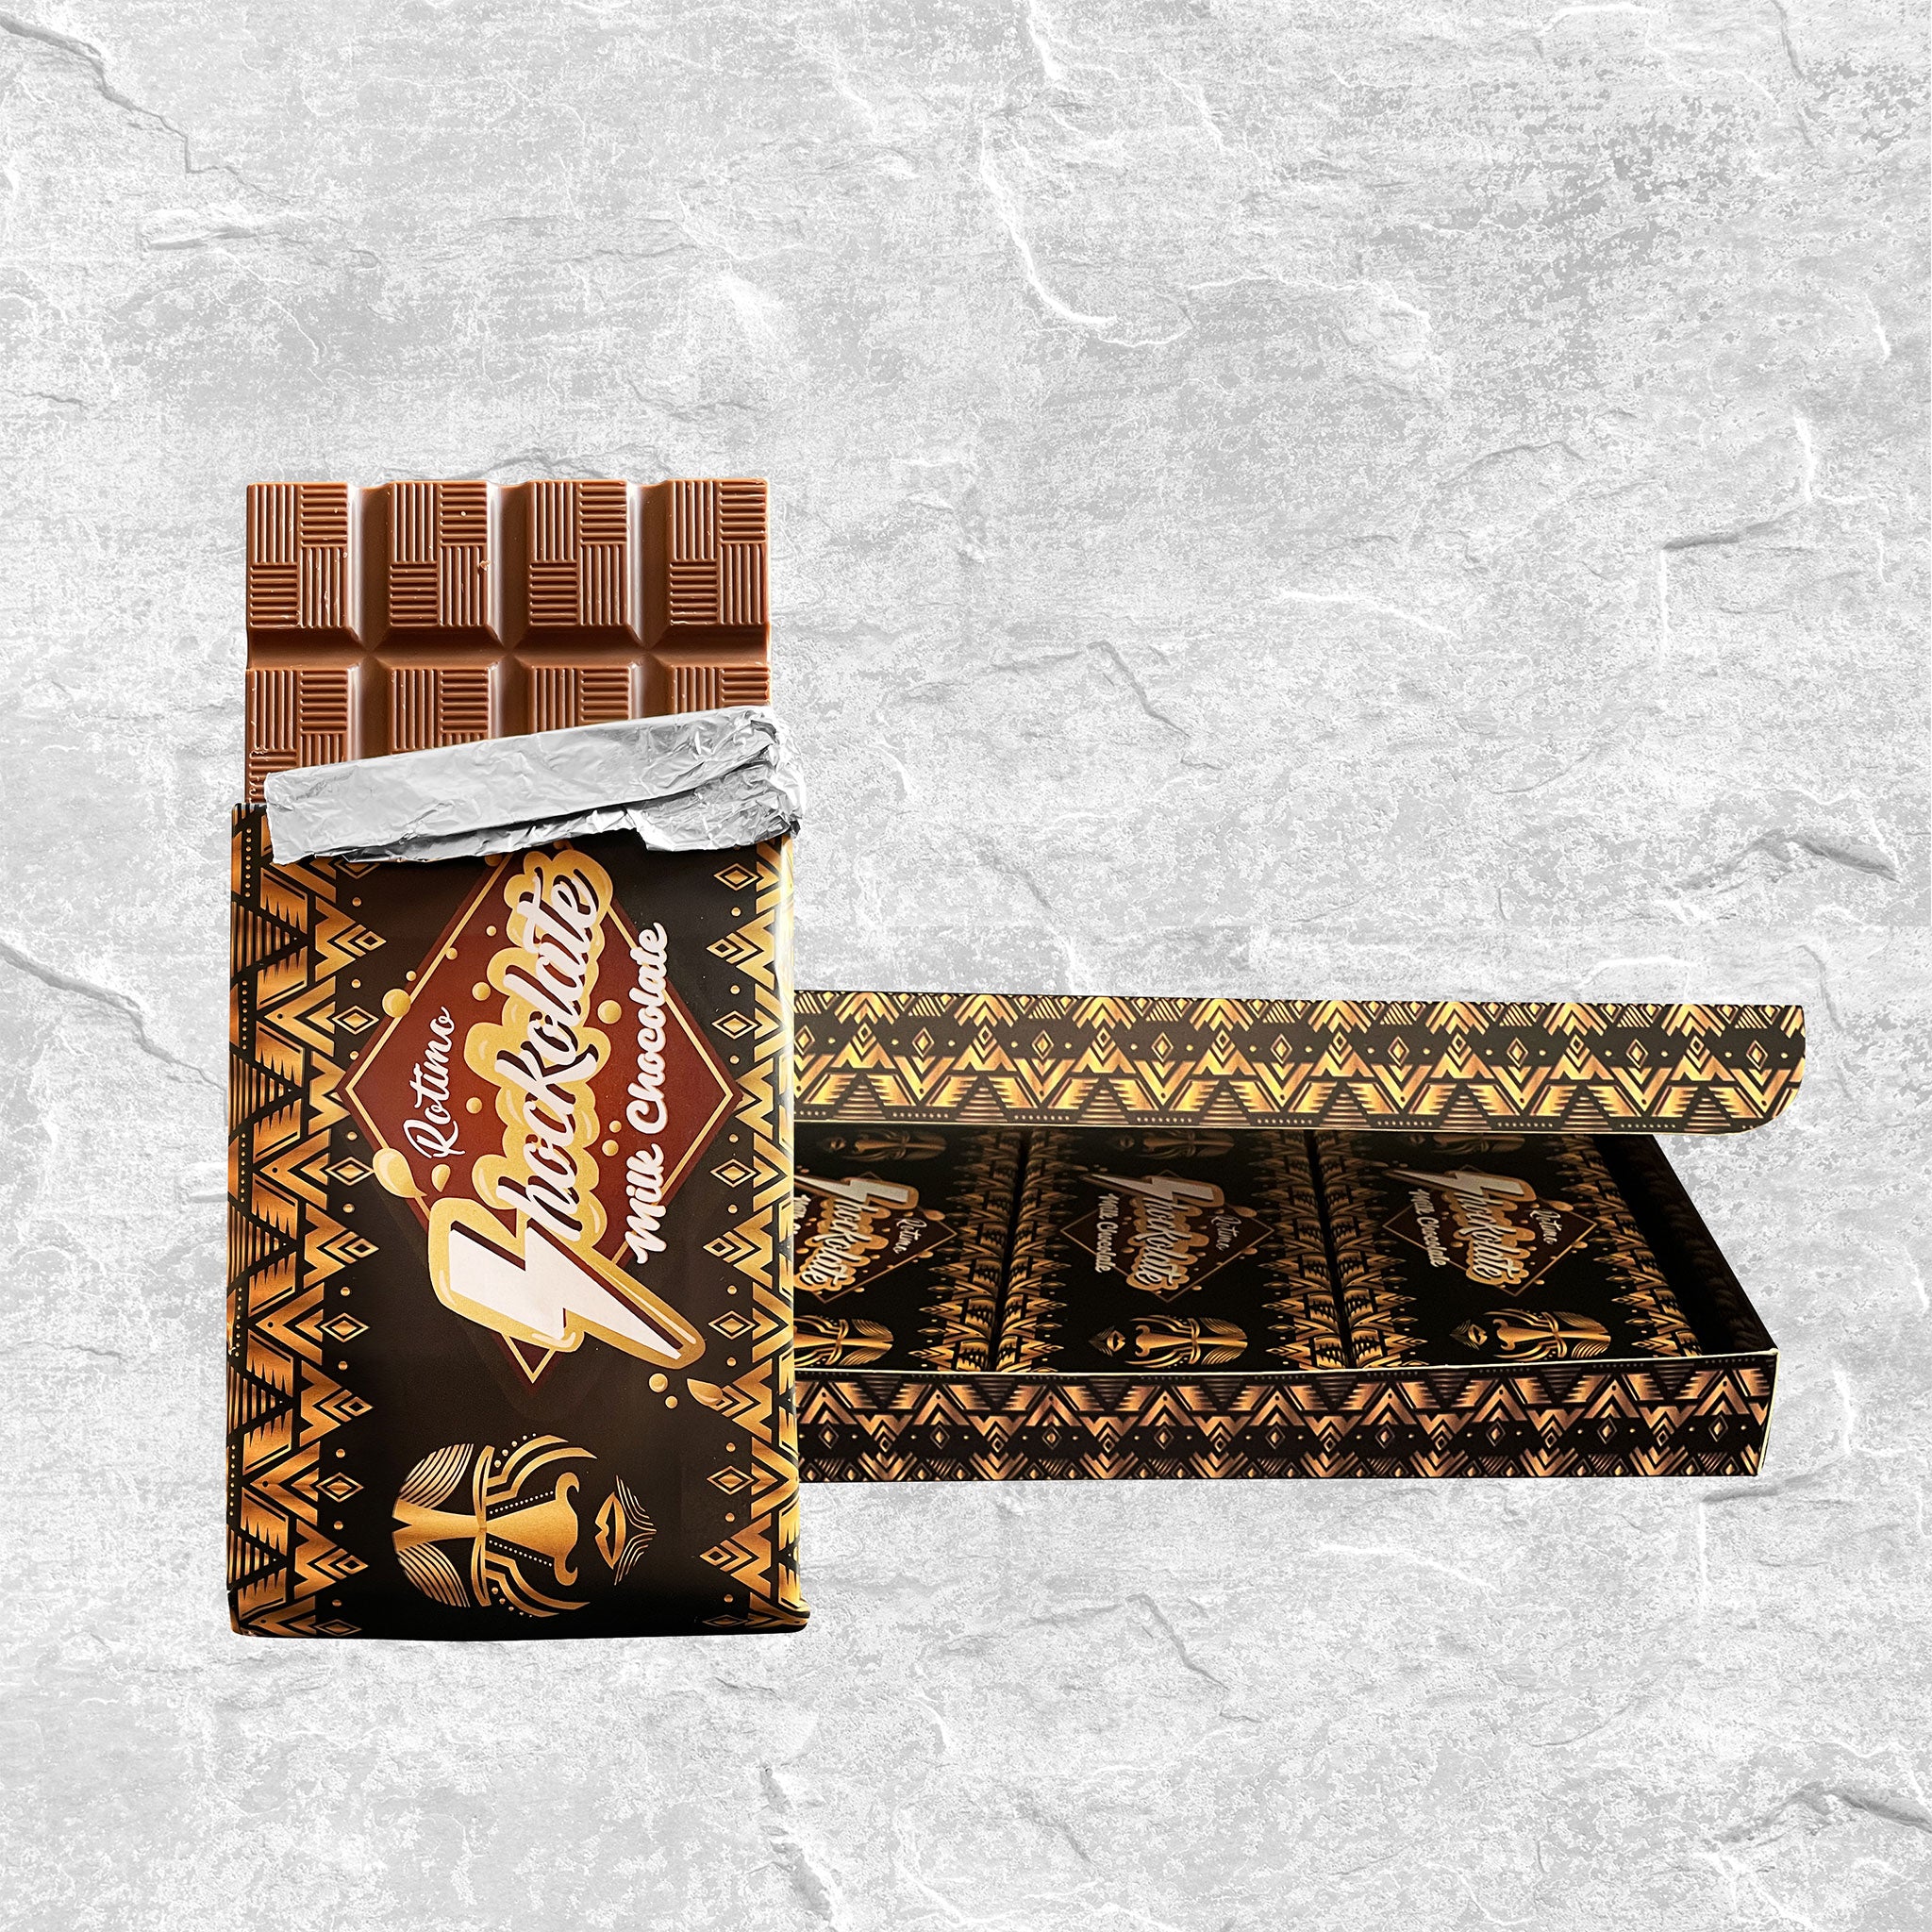 Box of Shockolate chocolate bars. Pack of 9.